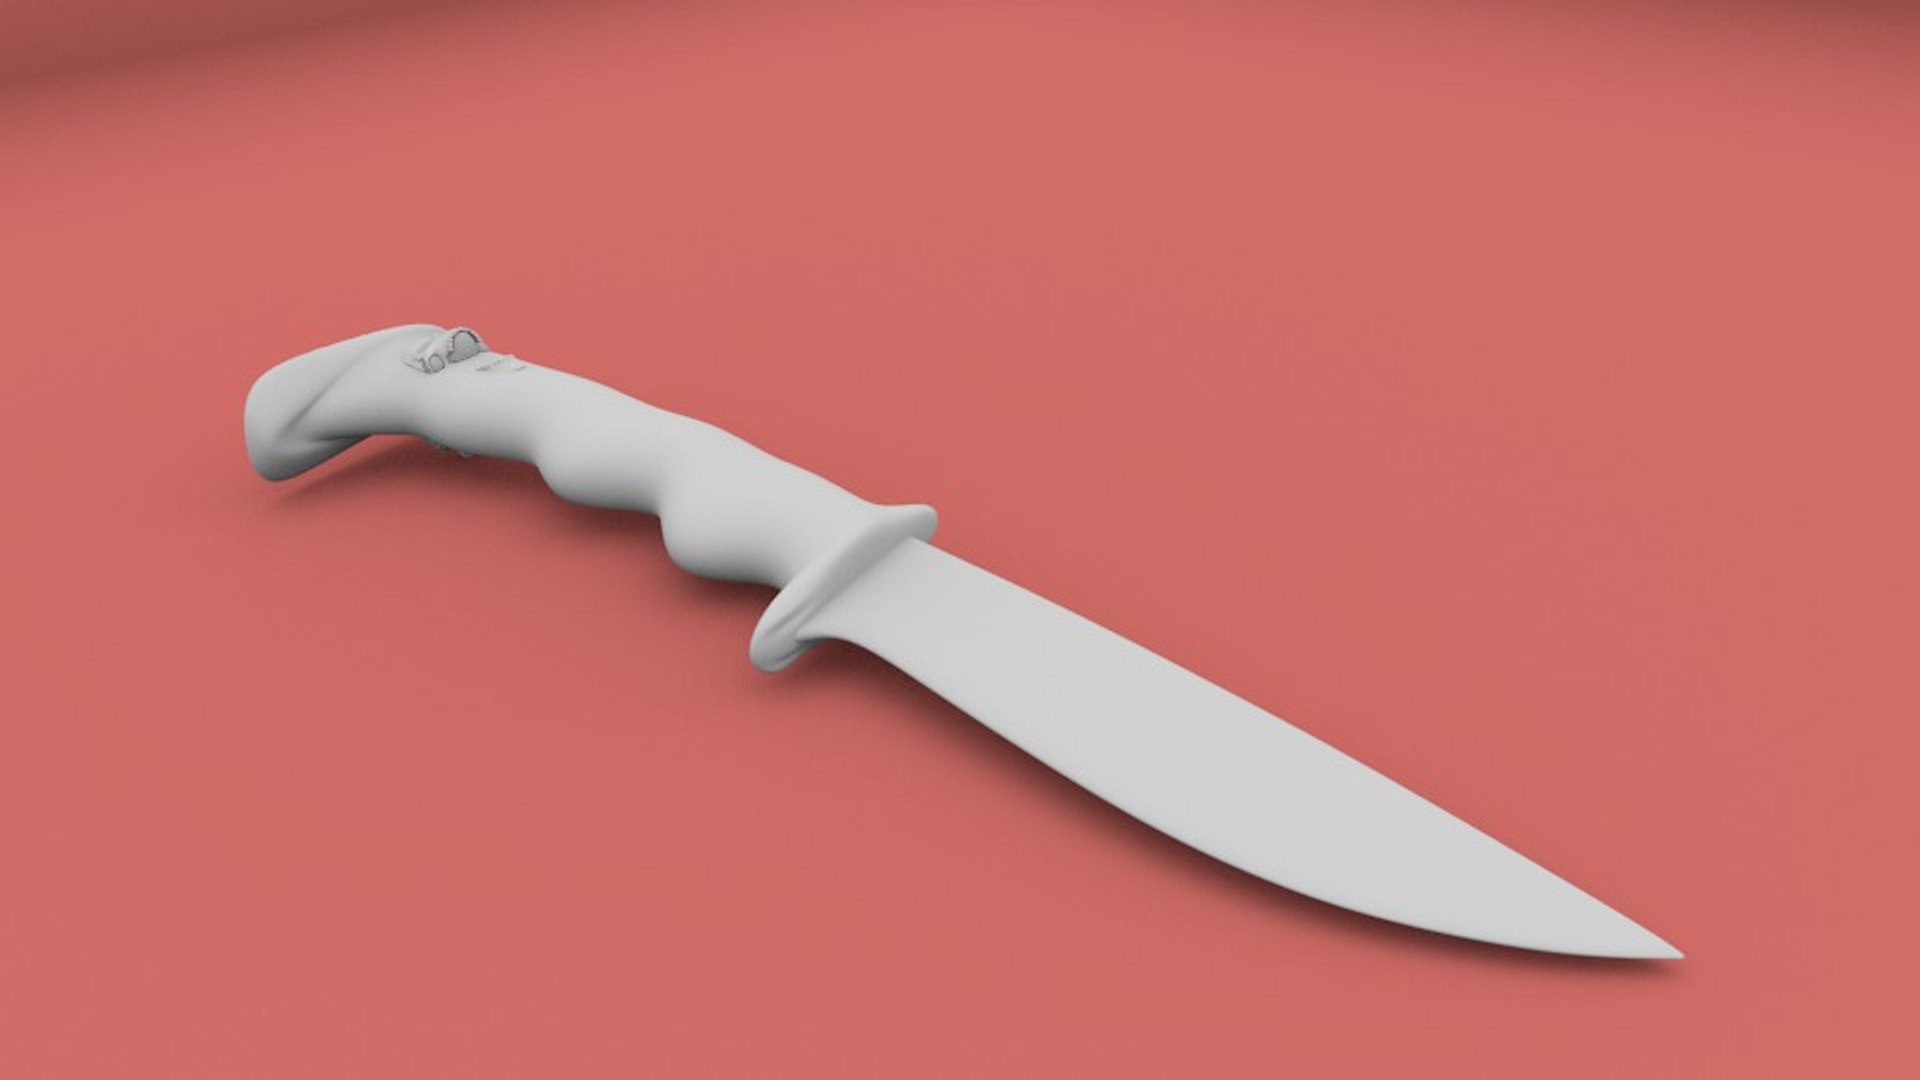 3d model knife https://p.turbosquid.com/ts-thumb/CI/kymj9d/vUakfvho/knife1/jpg/1390329451/1920x1080/fit_q87/d3762b7eab3ebc480a9a345c085a70ccbc60dd84/knife1.jpg